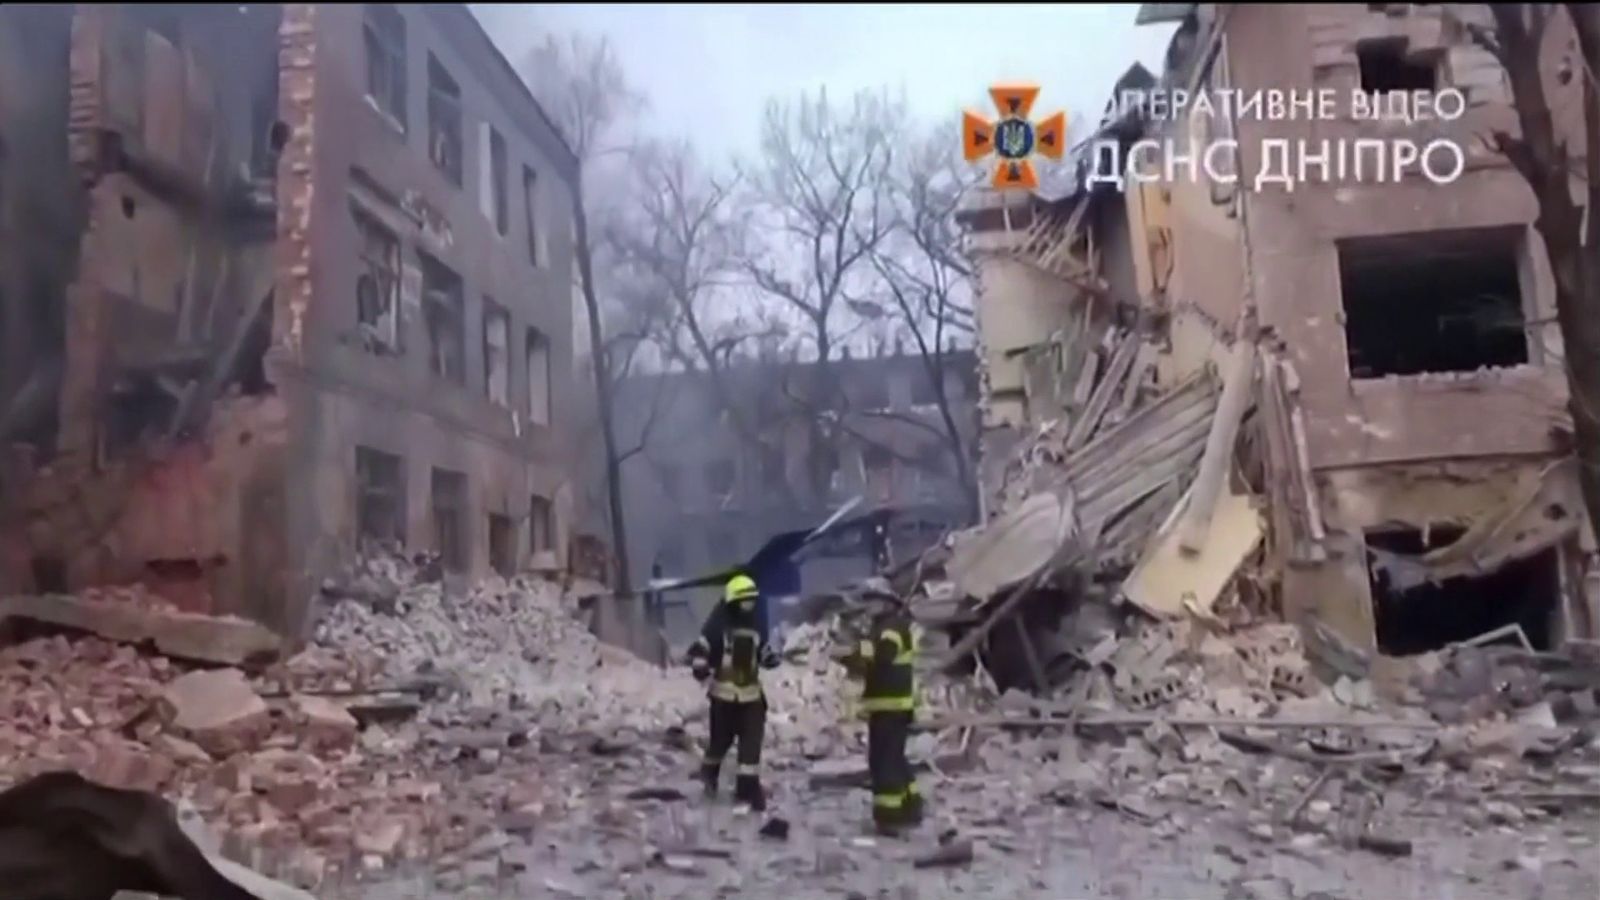 Ukraine War: Aftermath of Airstrikes on Dnipro